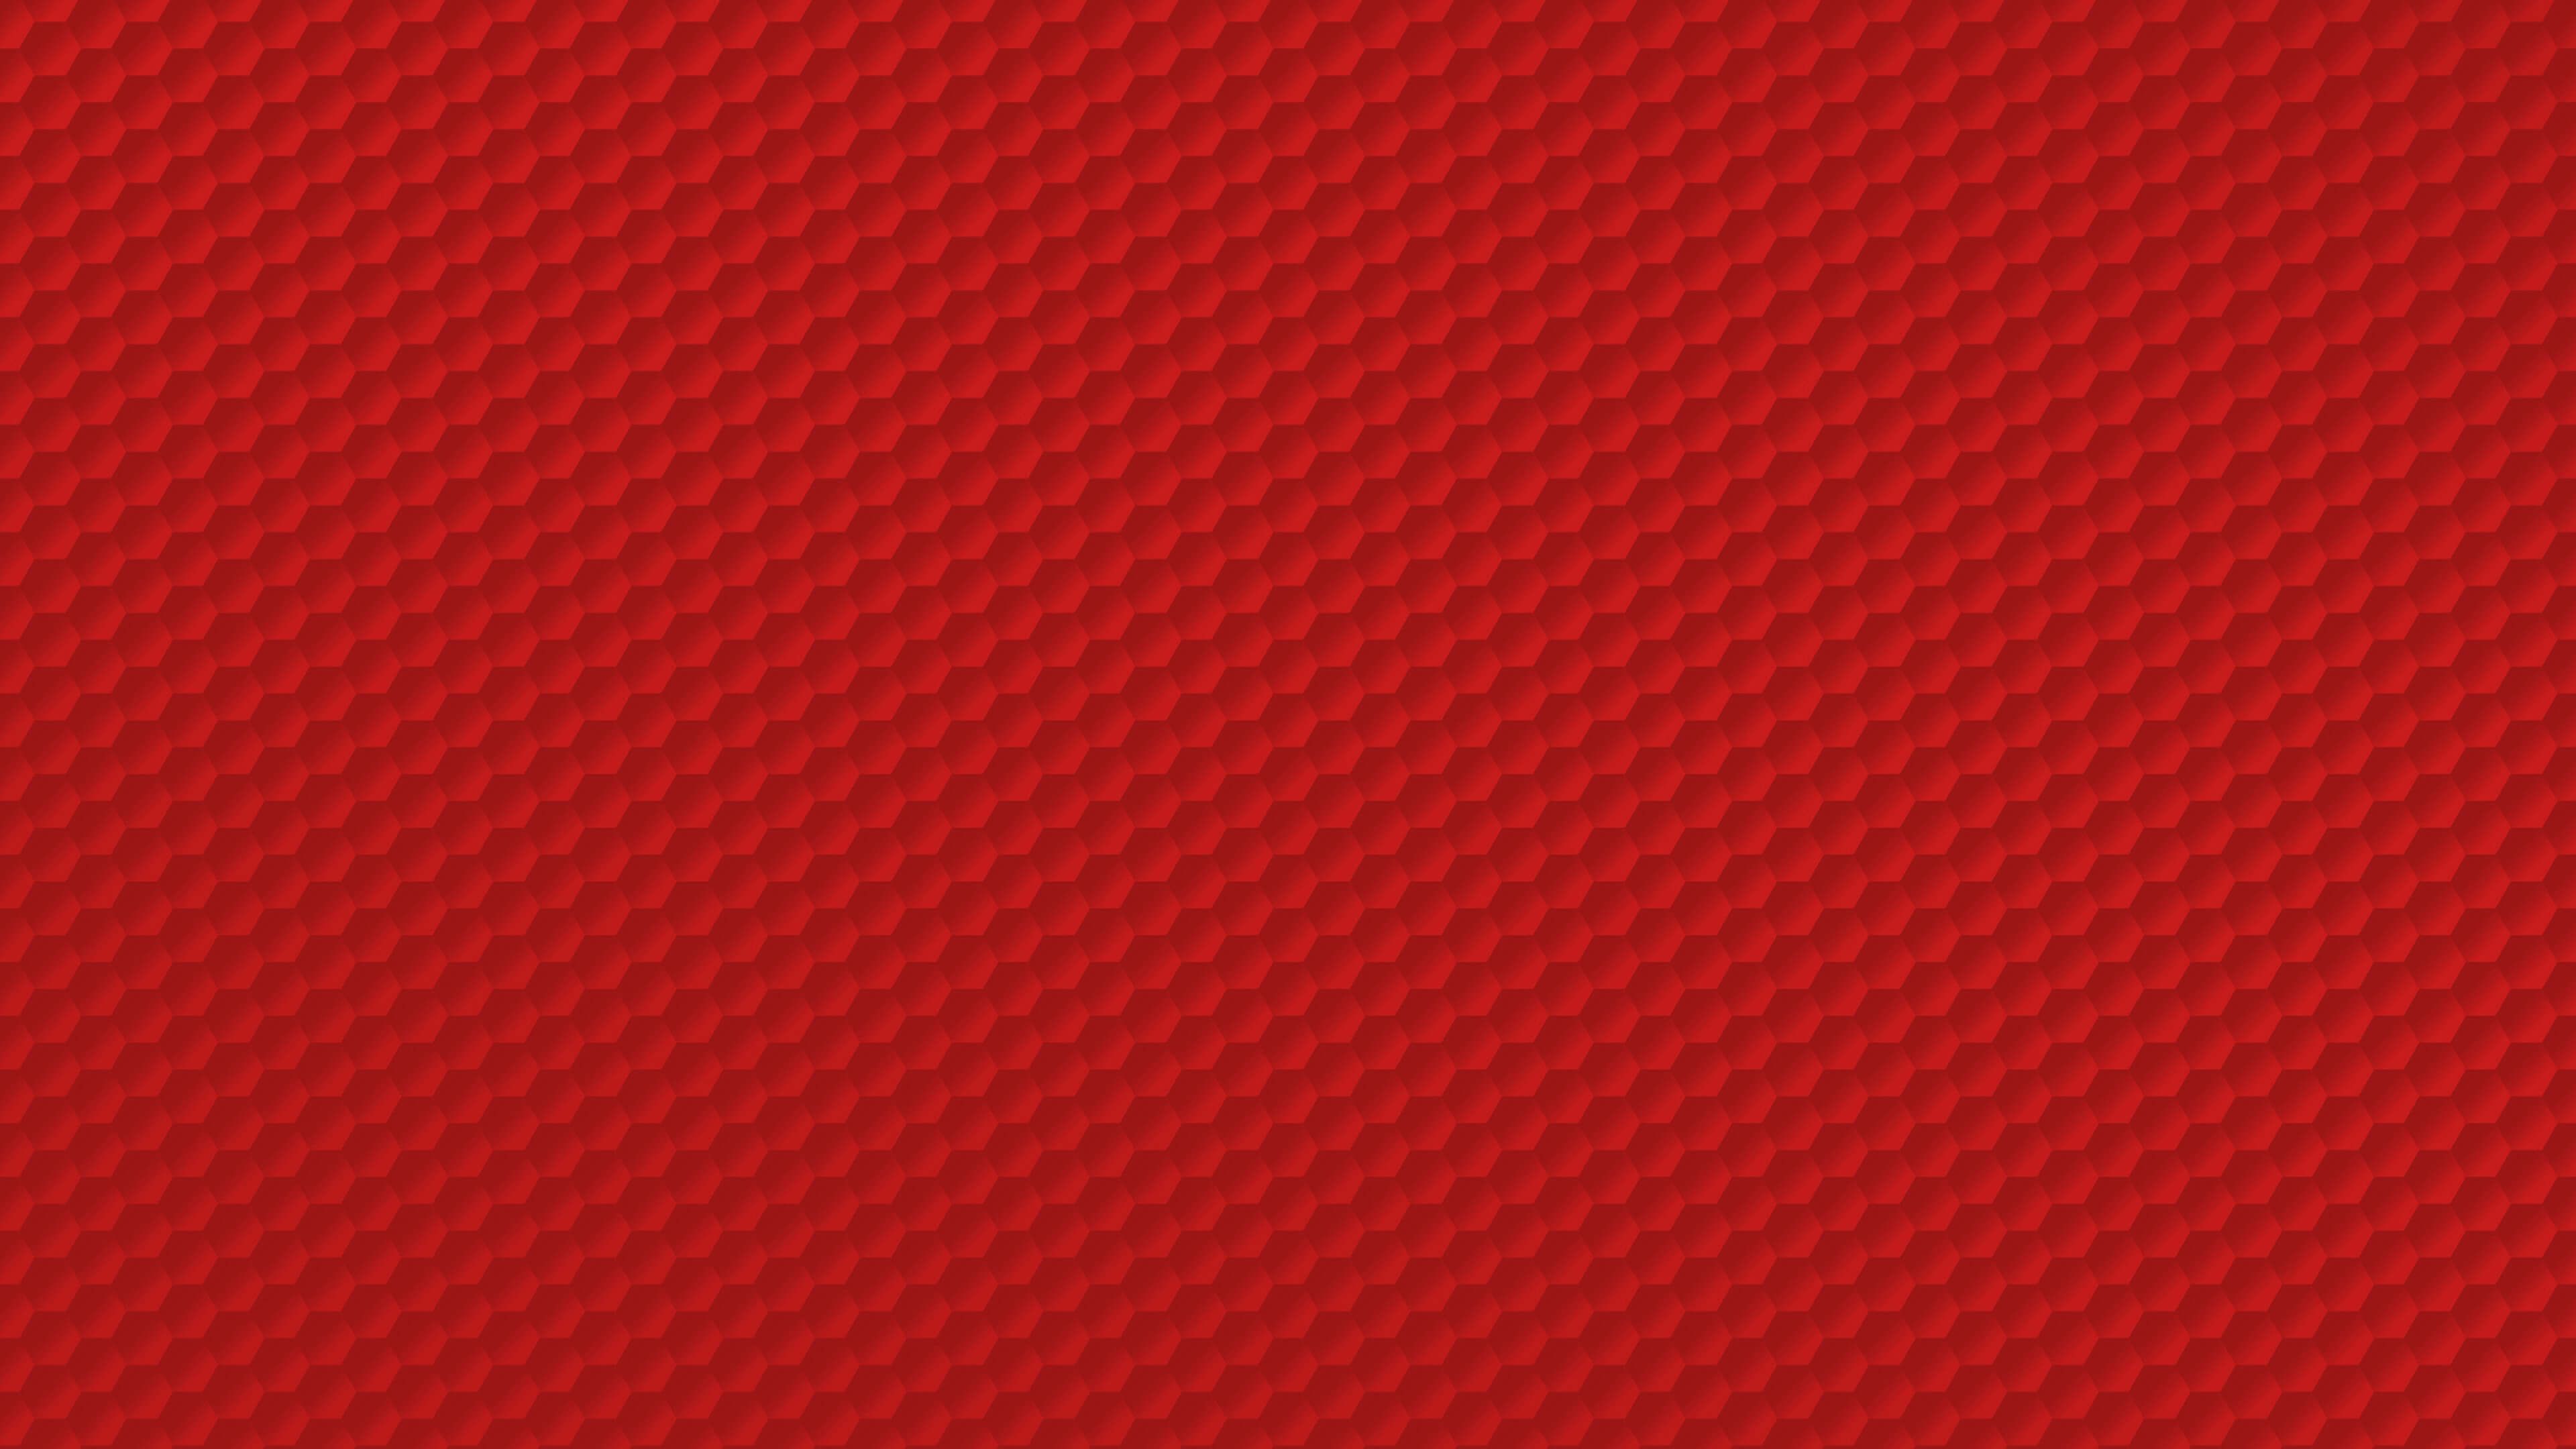 Red Honeycomb Pattern 4K Wallpaper. Circle Of Friends Animal Society, Inc